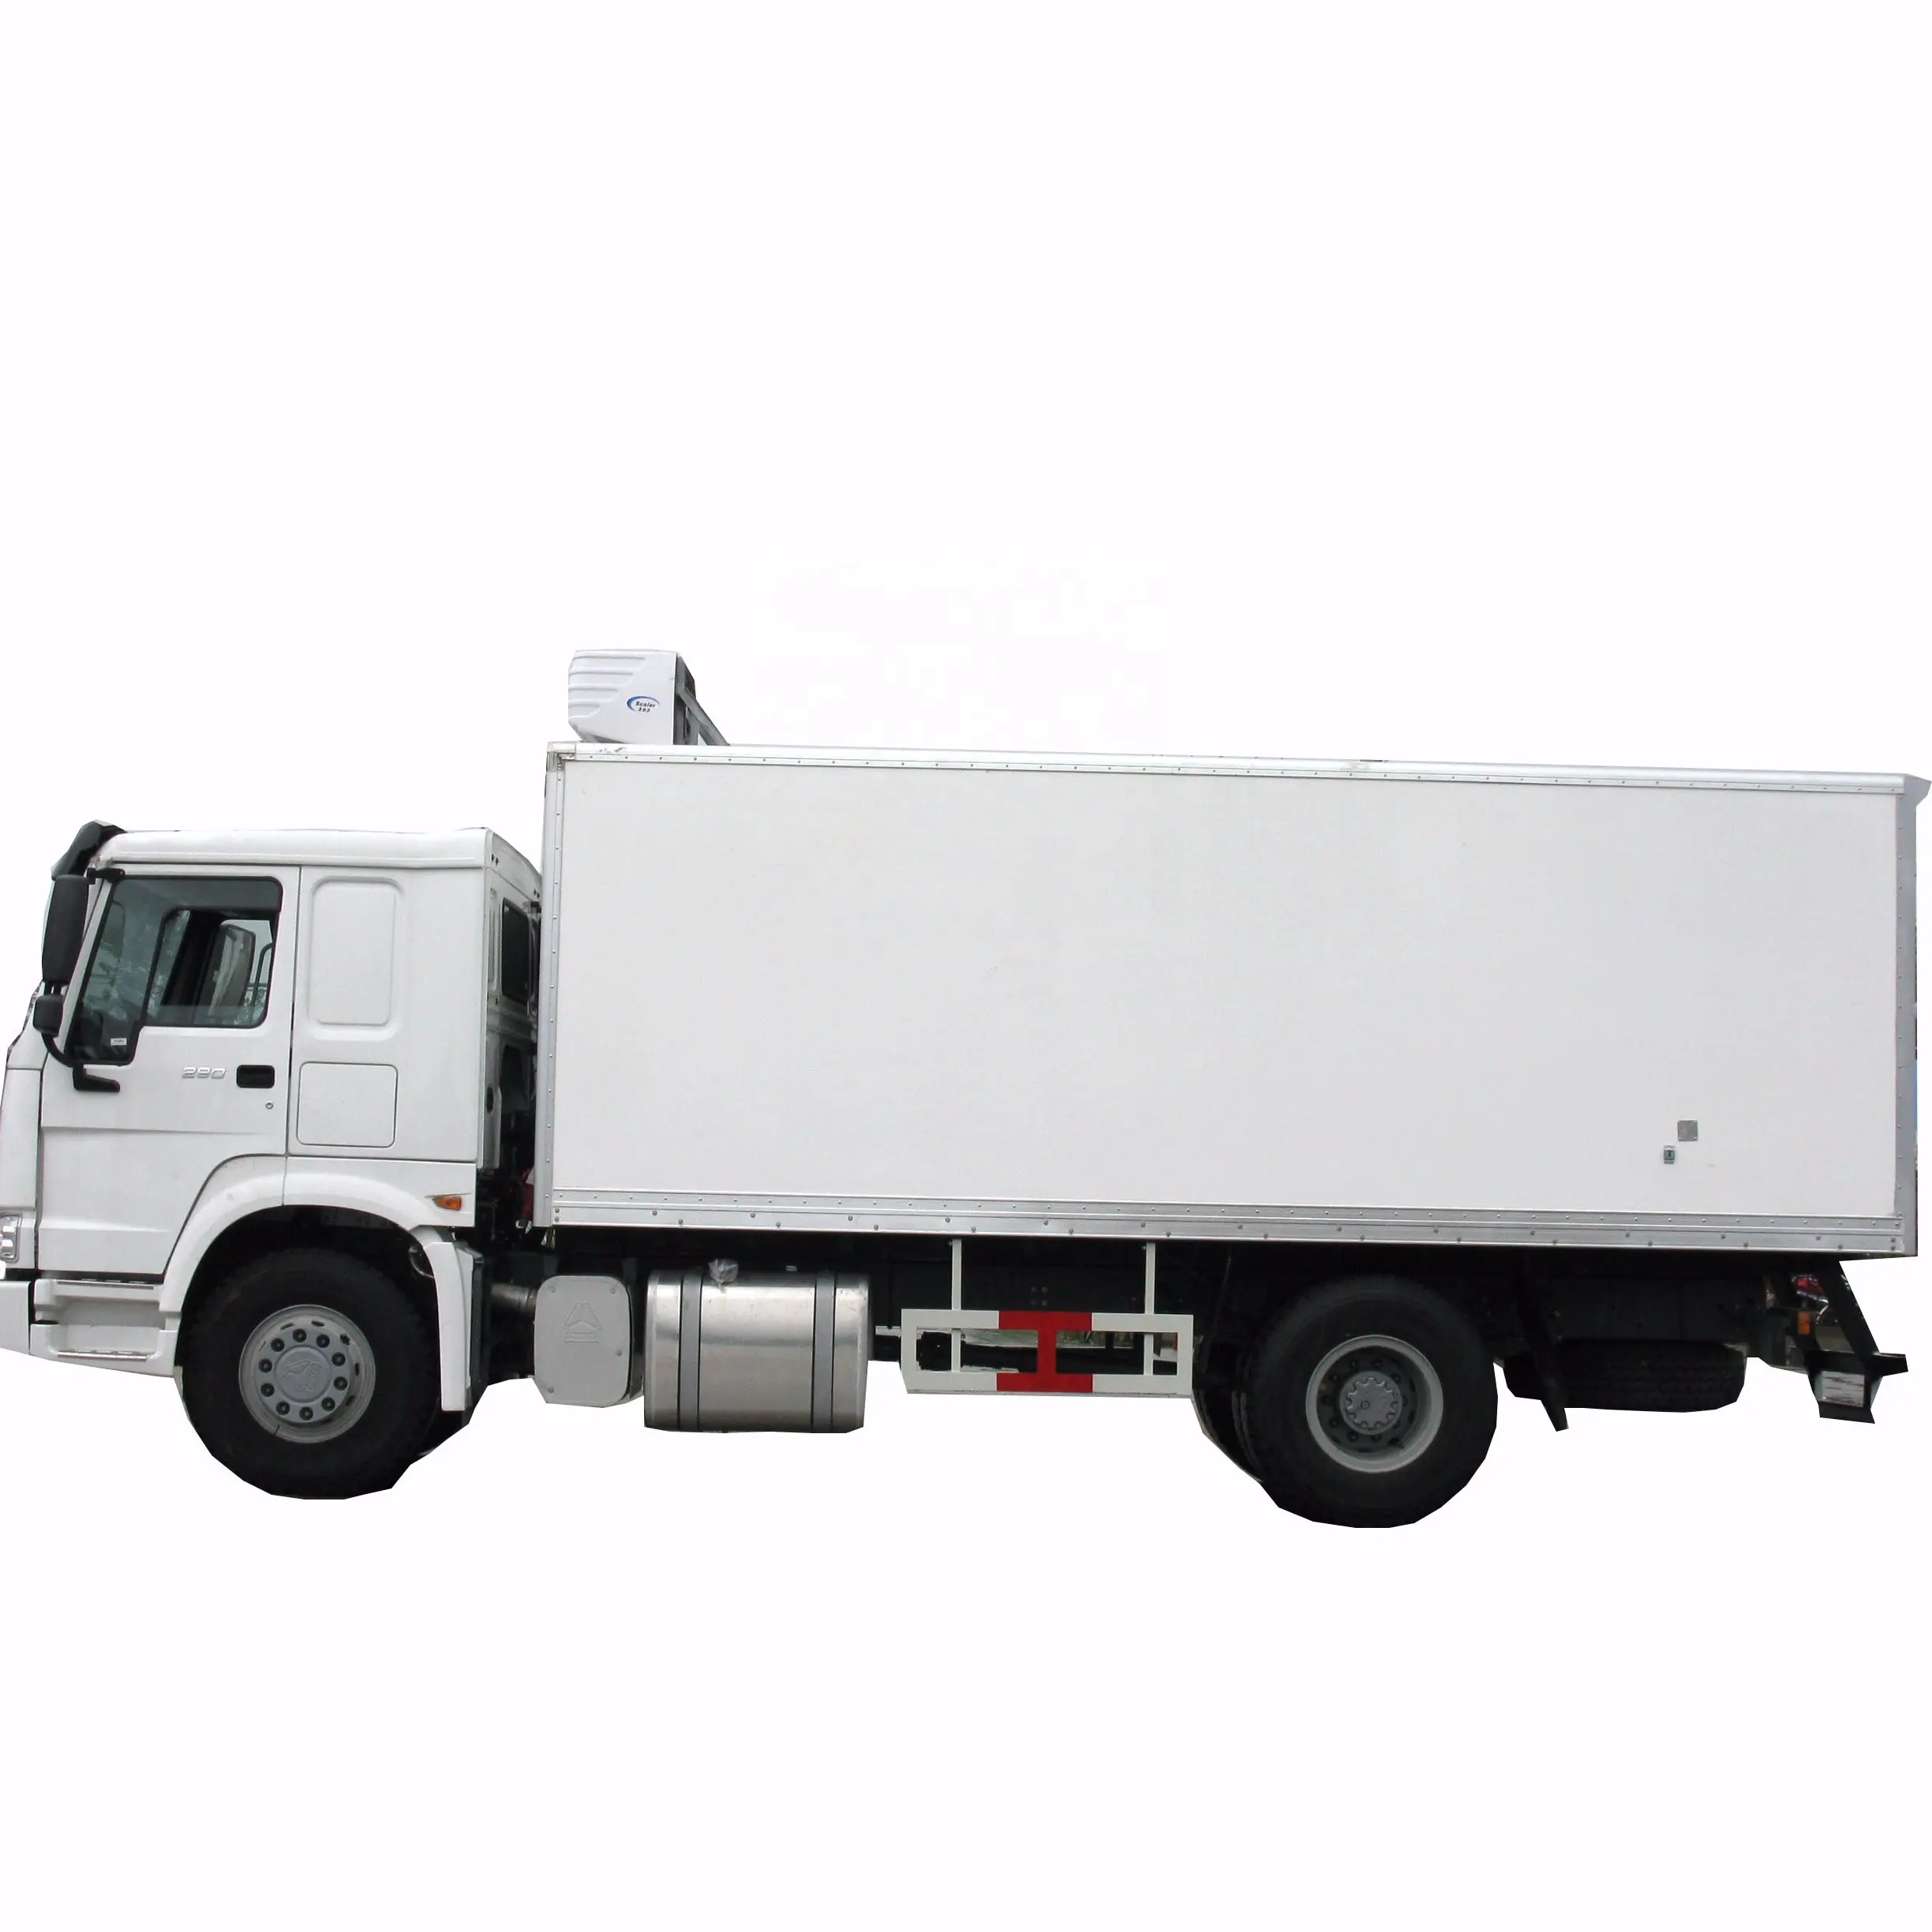 HOWO 4x2 מזון משאית בקירור במקפיא משאית 10 טון תיבת Thermo מלך משאית קירור יחידות מקפיא למכירה המחיר הטוב ביותר